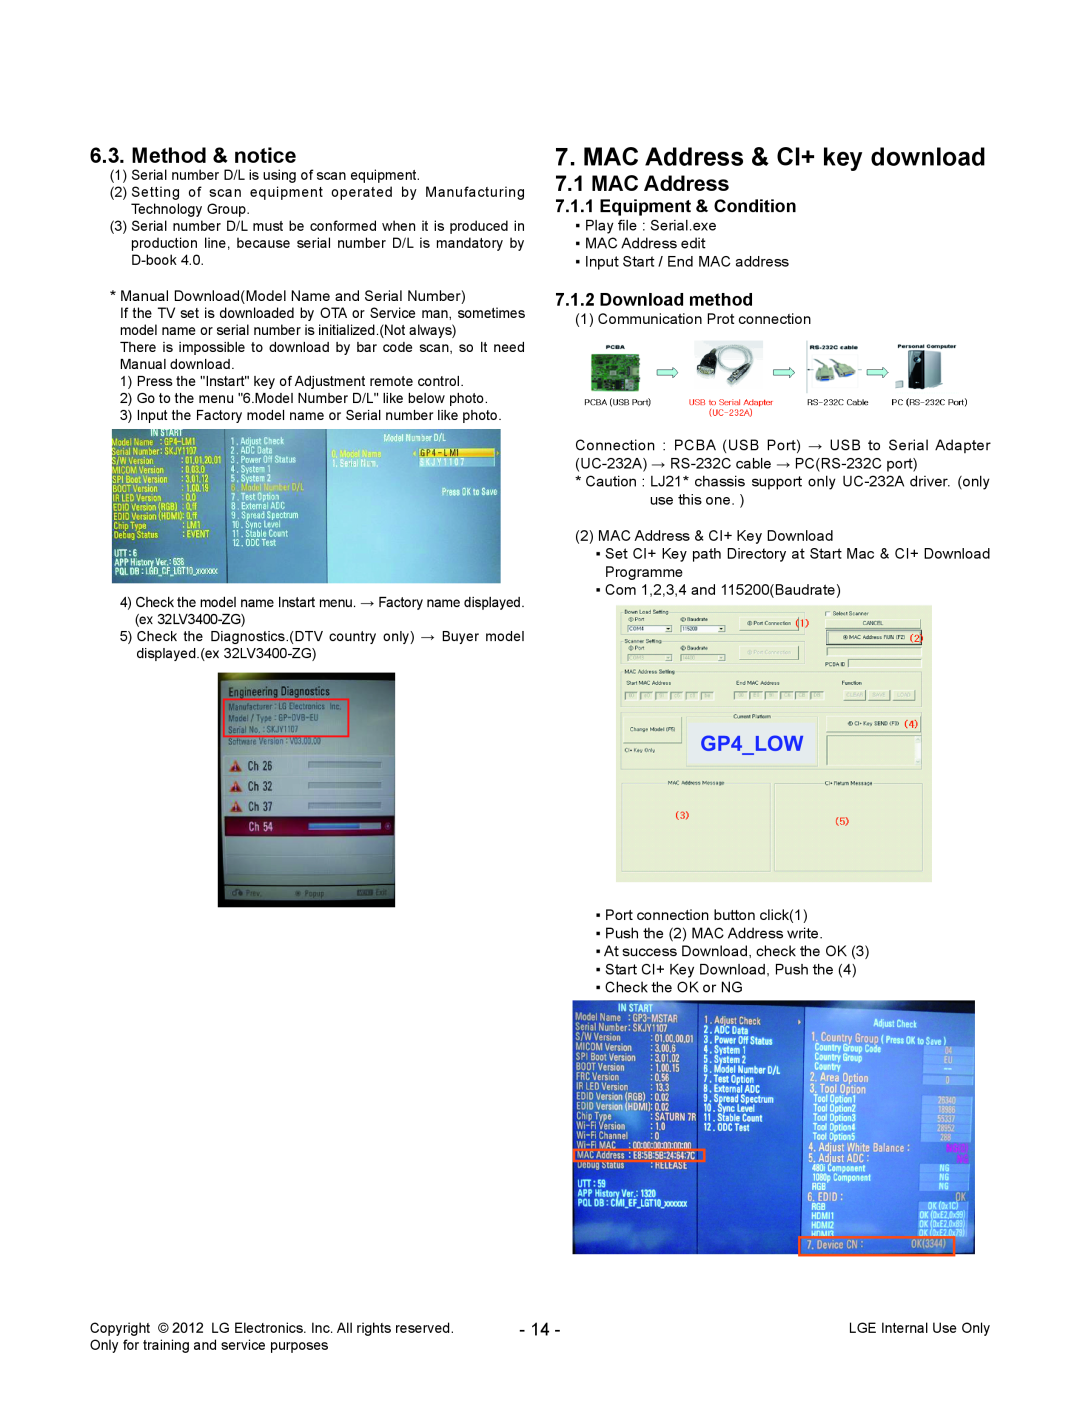 LG Electronics 32LS679C-ZC service manual MAC Address & CI+ key download, Method & notice, GP4LOW 